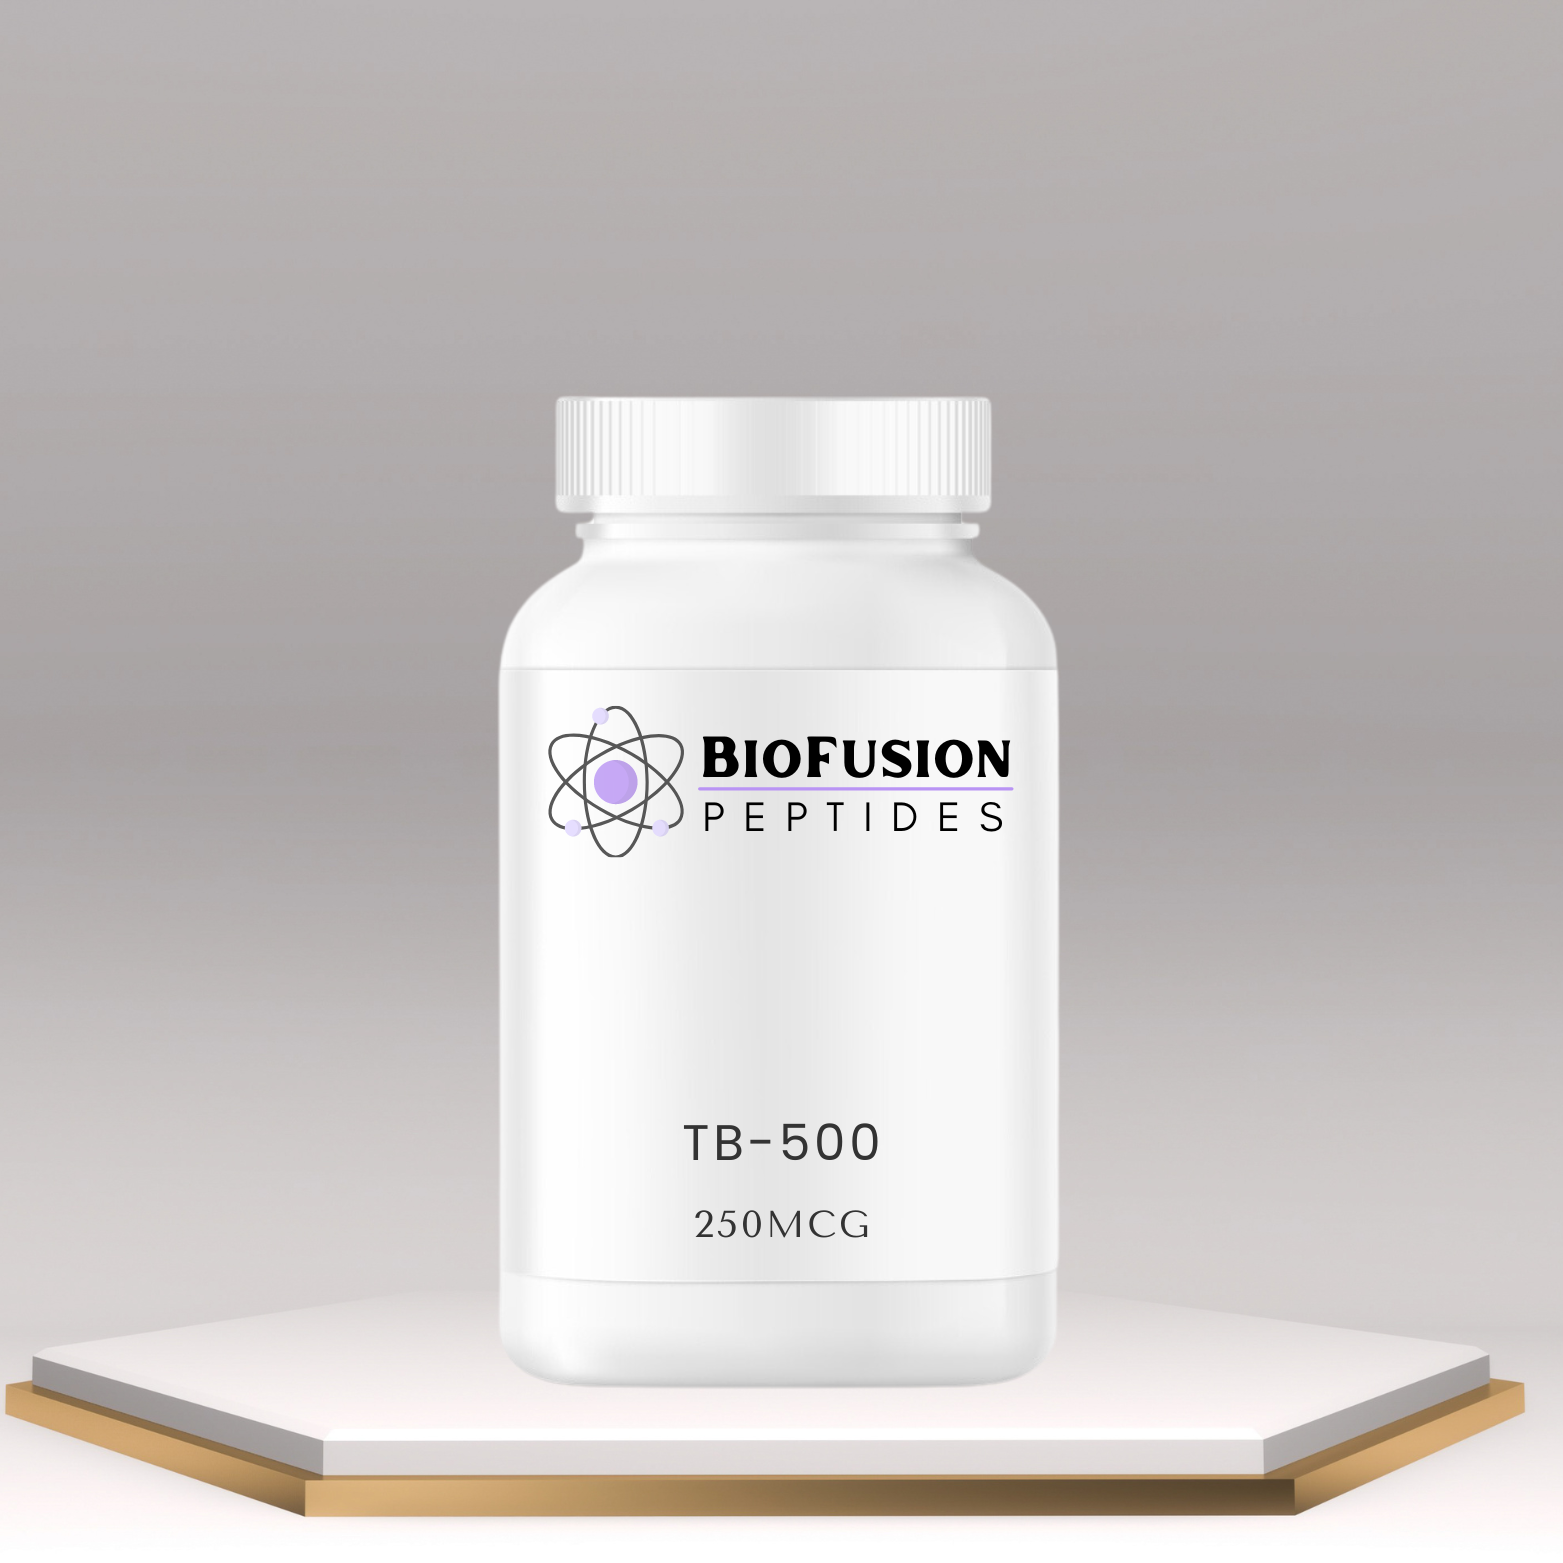 BioFusion Peptides TB-500 bottle 250mcg